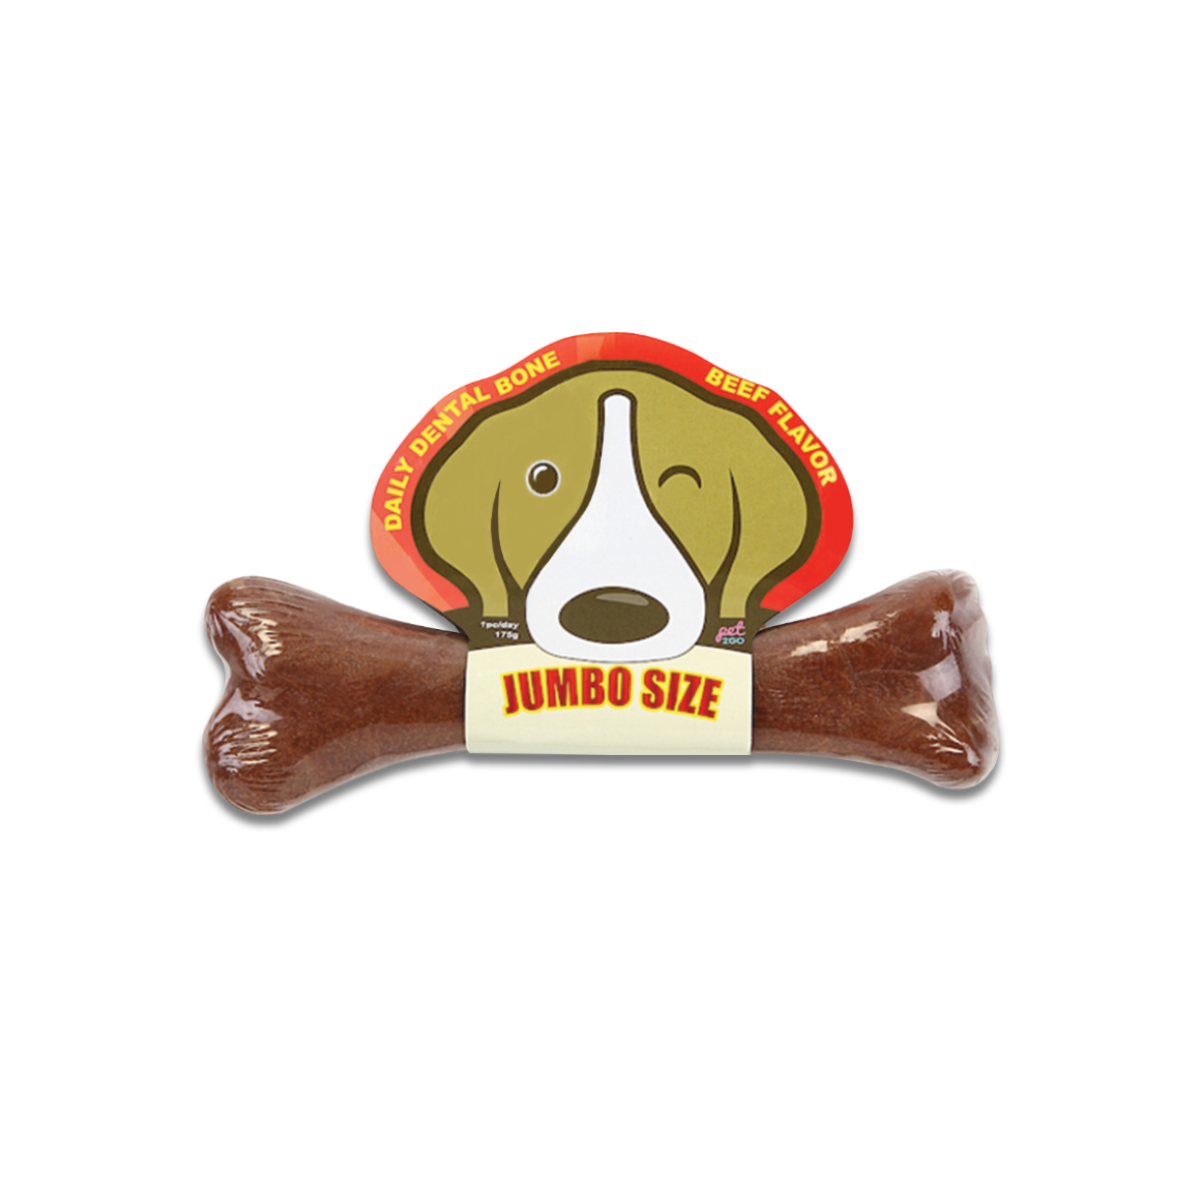 Daily Dental Bone Jumbo Size Beef Flavor เดลี่ เดนทัลโบน ขนมขัดฟันสุนัข จัมโบ้ รสเนื้อ ขนาด 175 กรัม